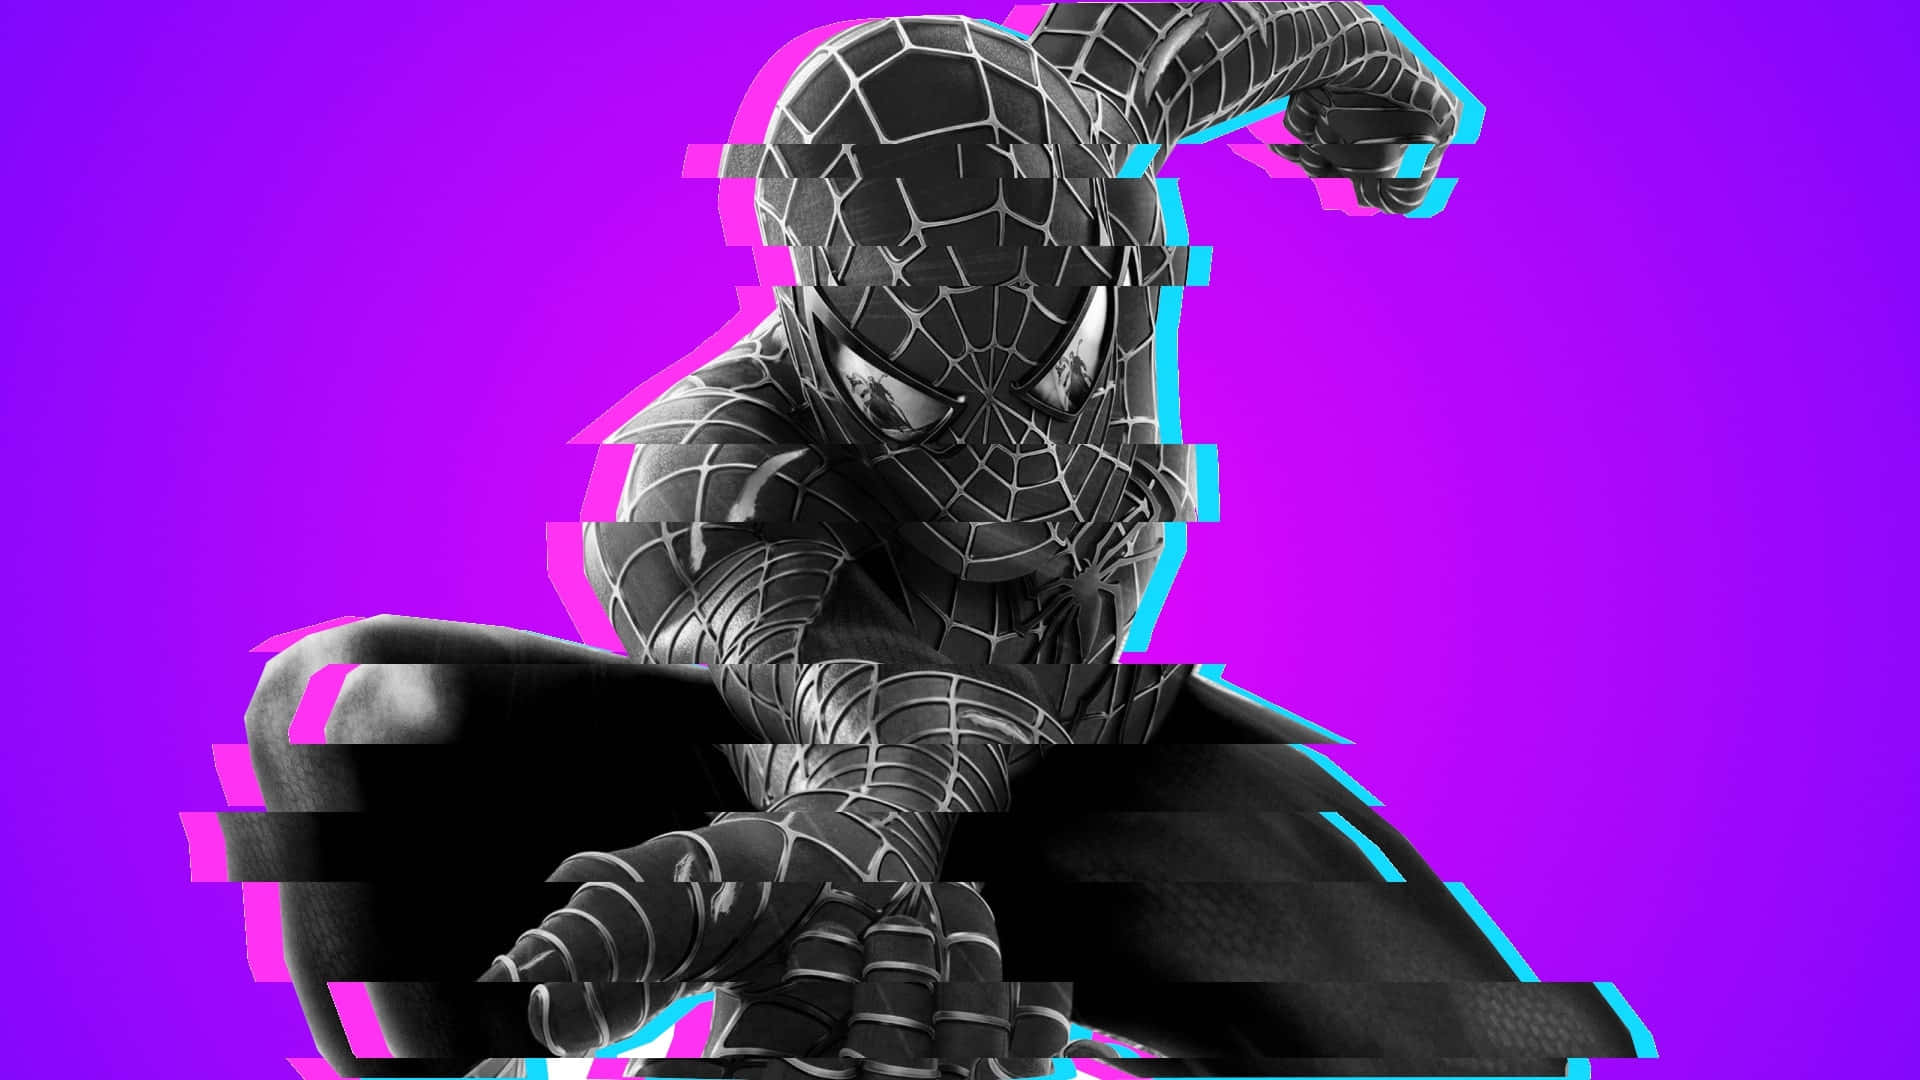 Spider-Man 3 Action-packed Scene Wallpaper